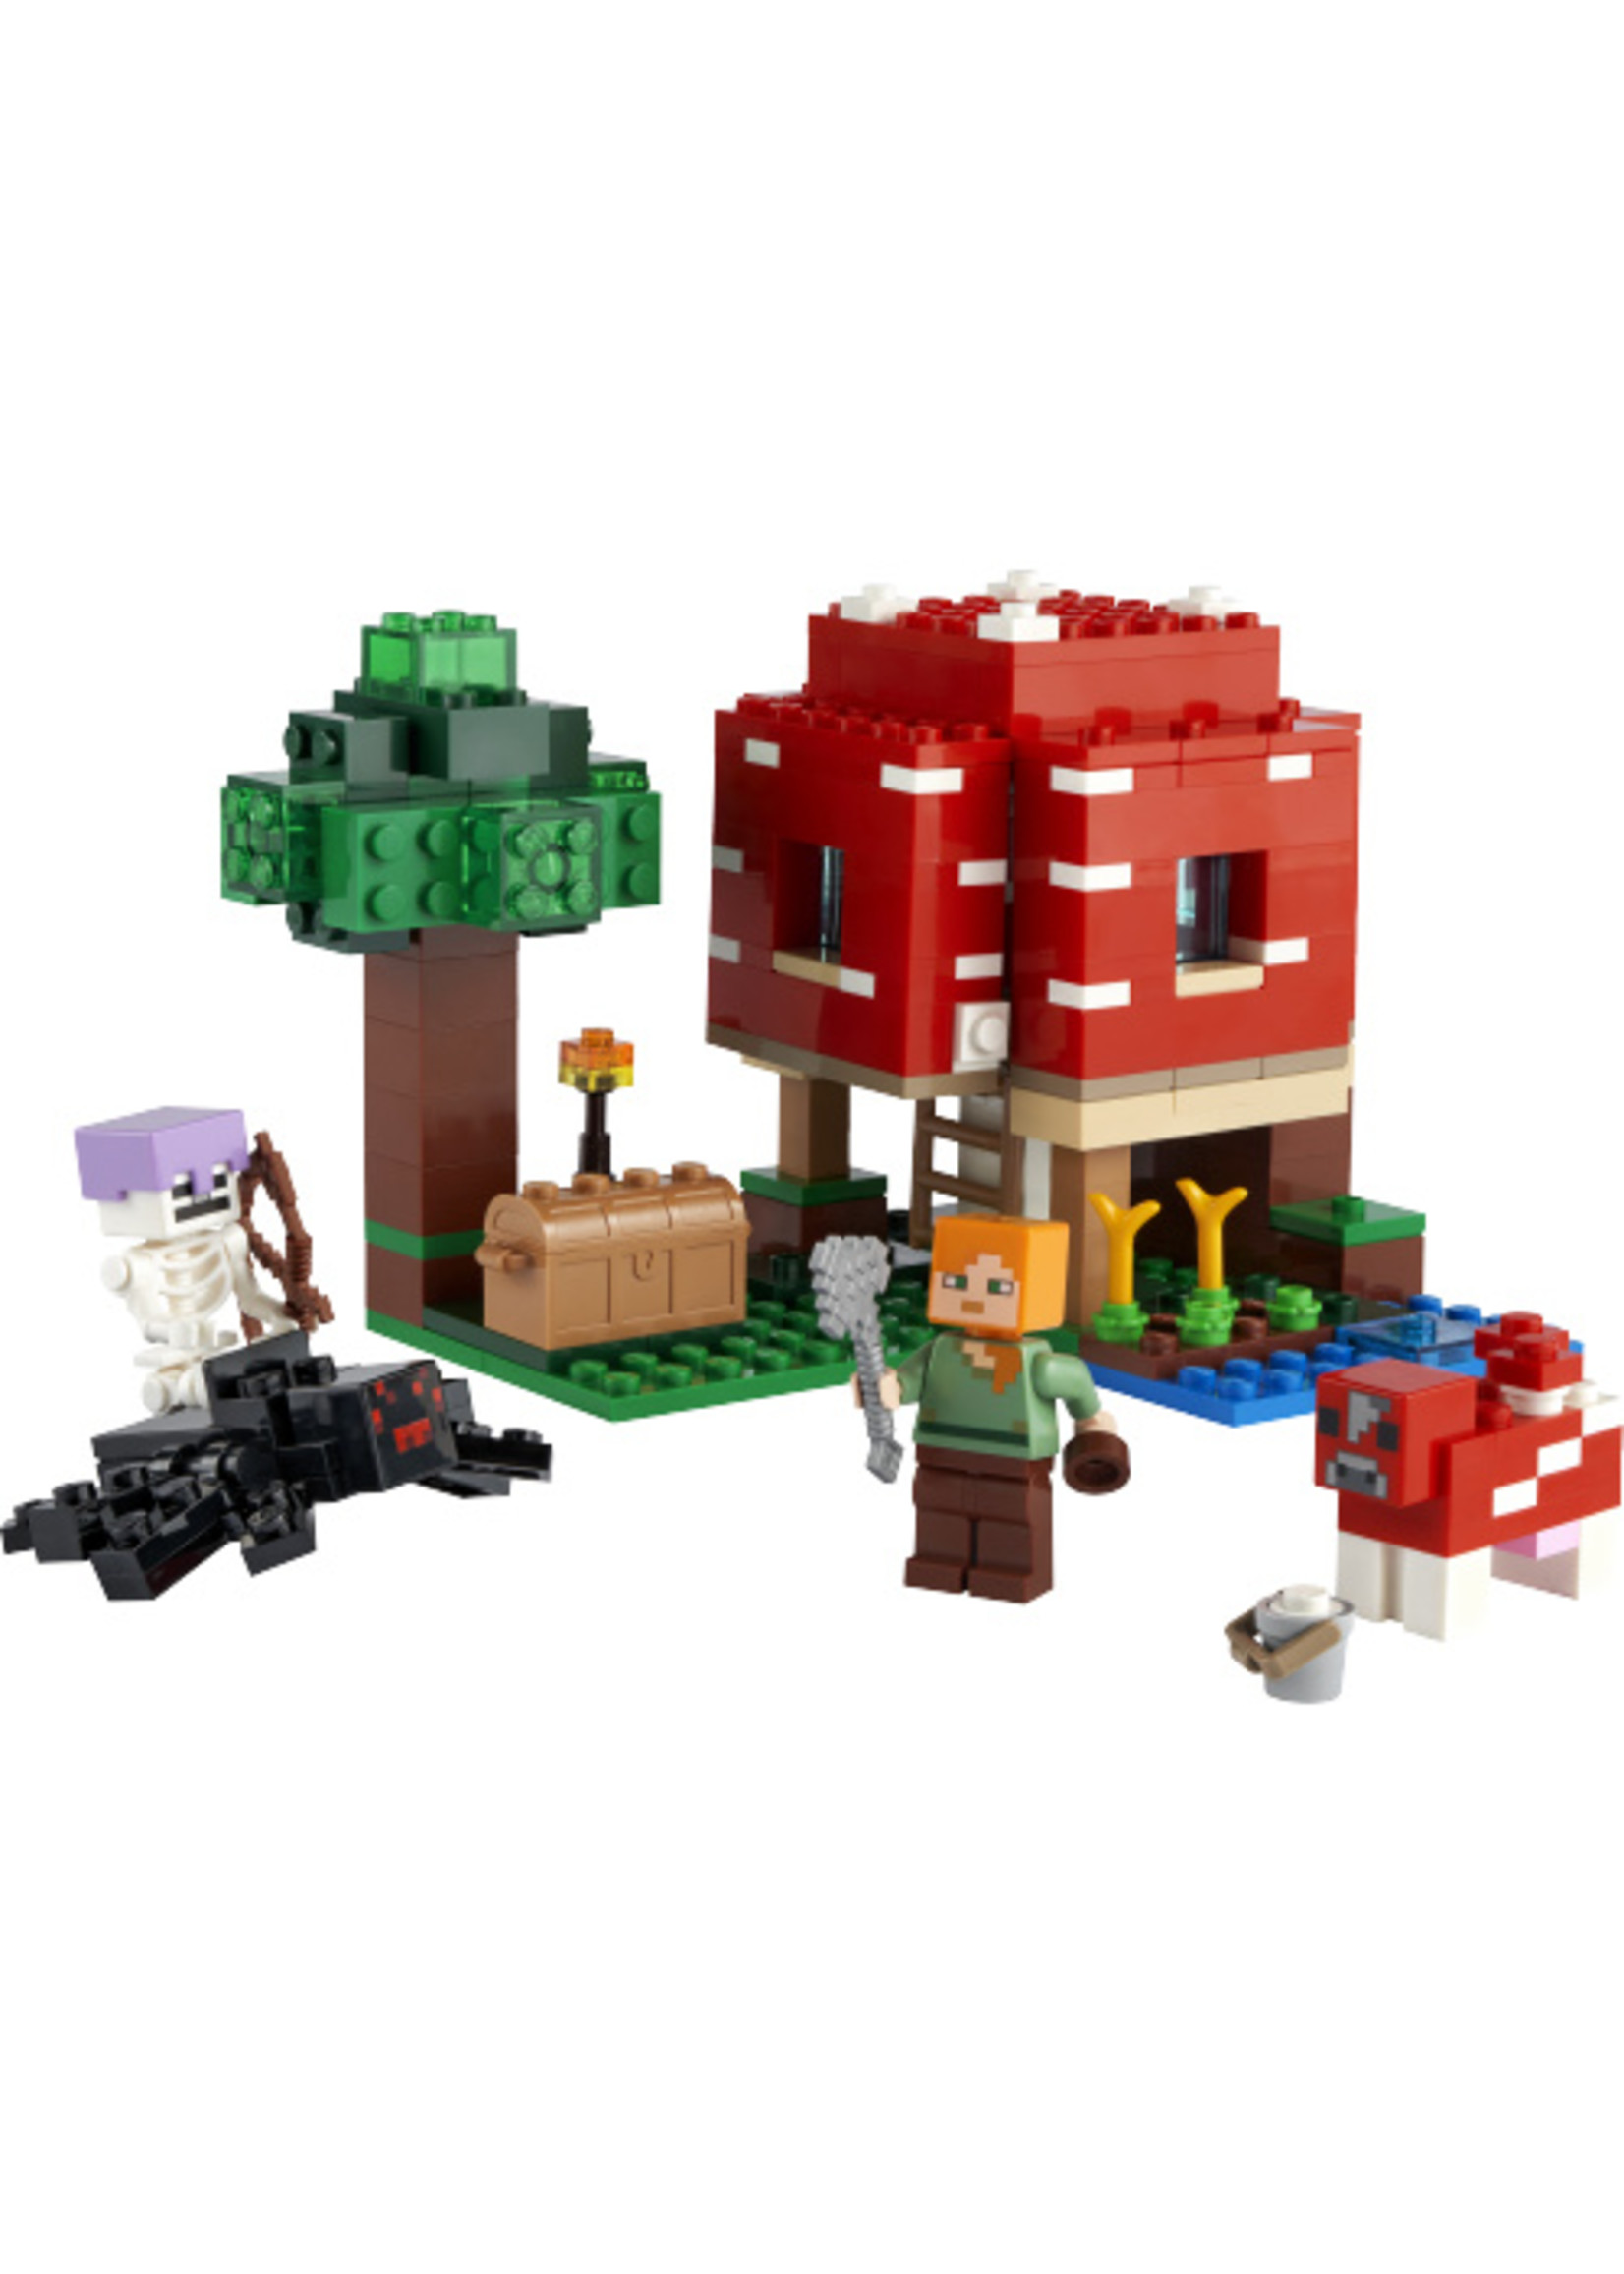 LEGO 21179 - The Mushroom House